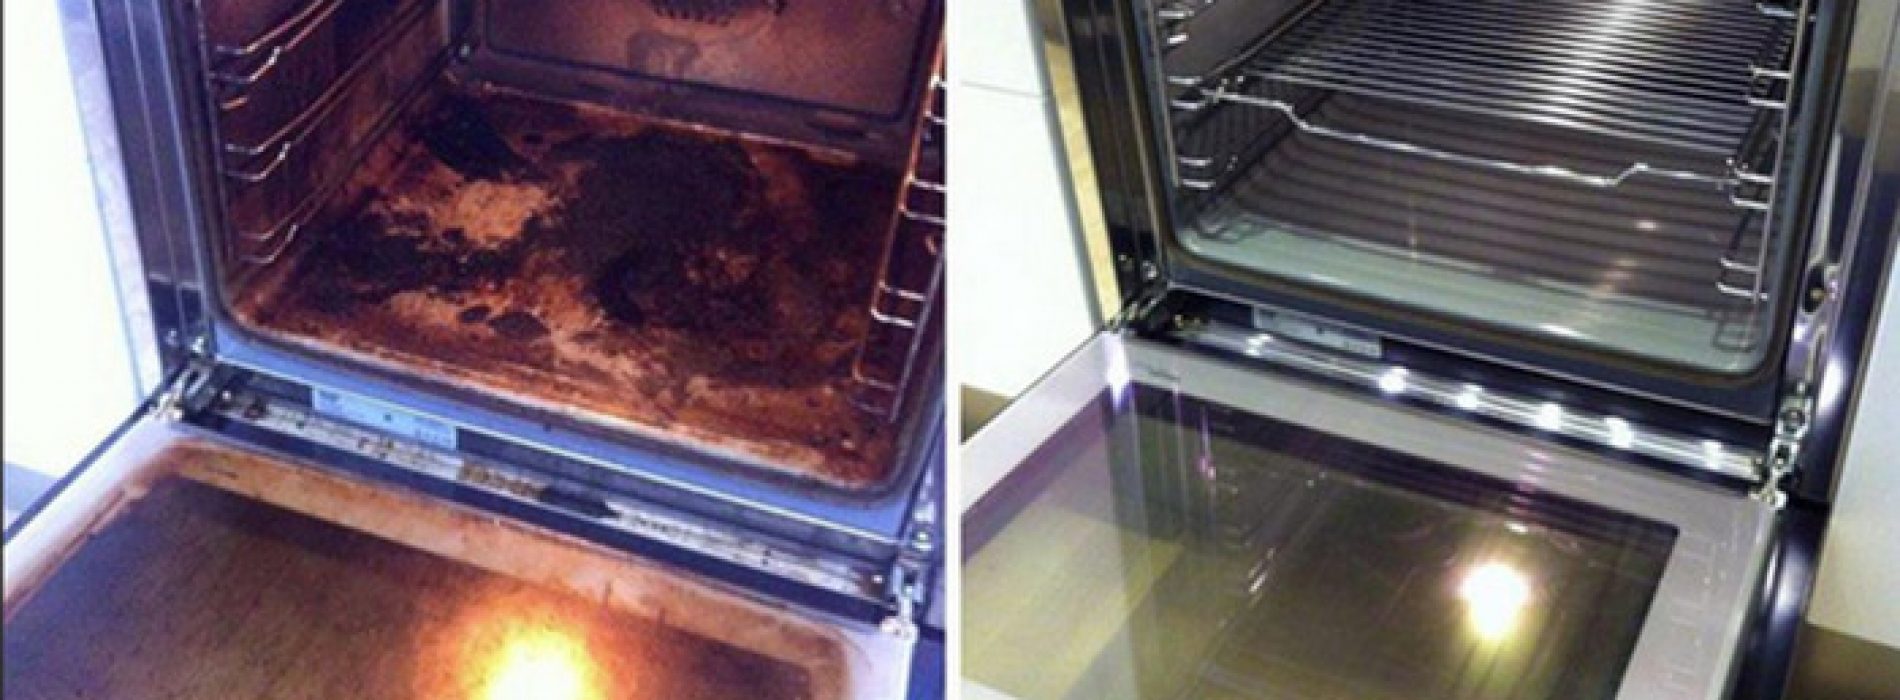 Met DIT middeltje maak jij je oven weer perfect schoon! DIT weet haast niemand!